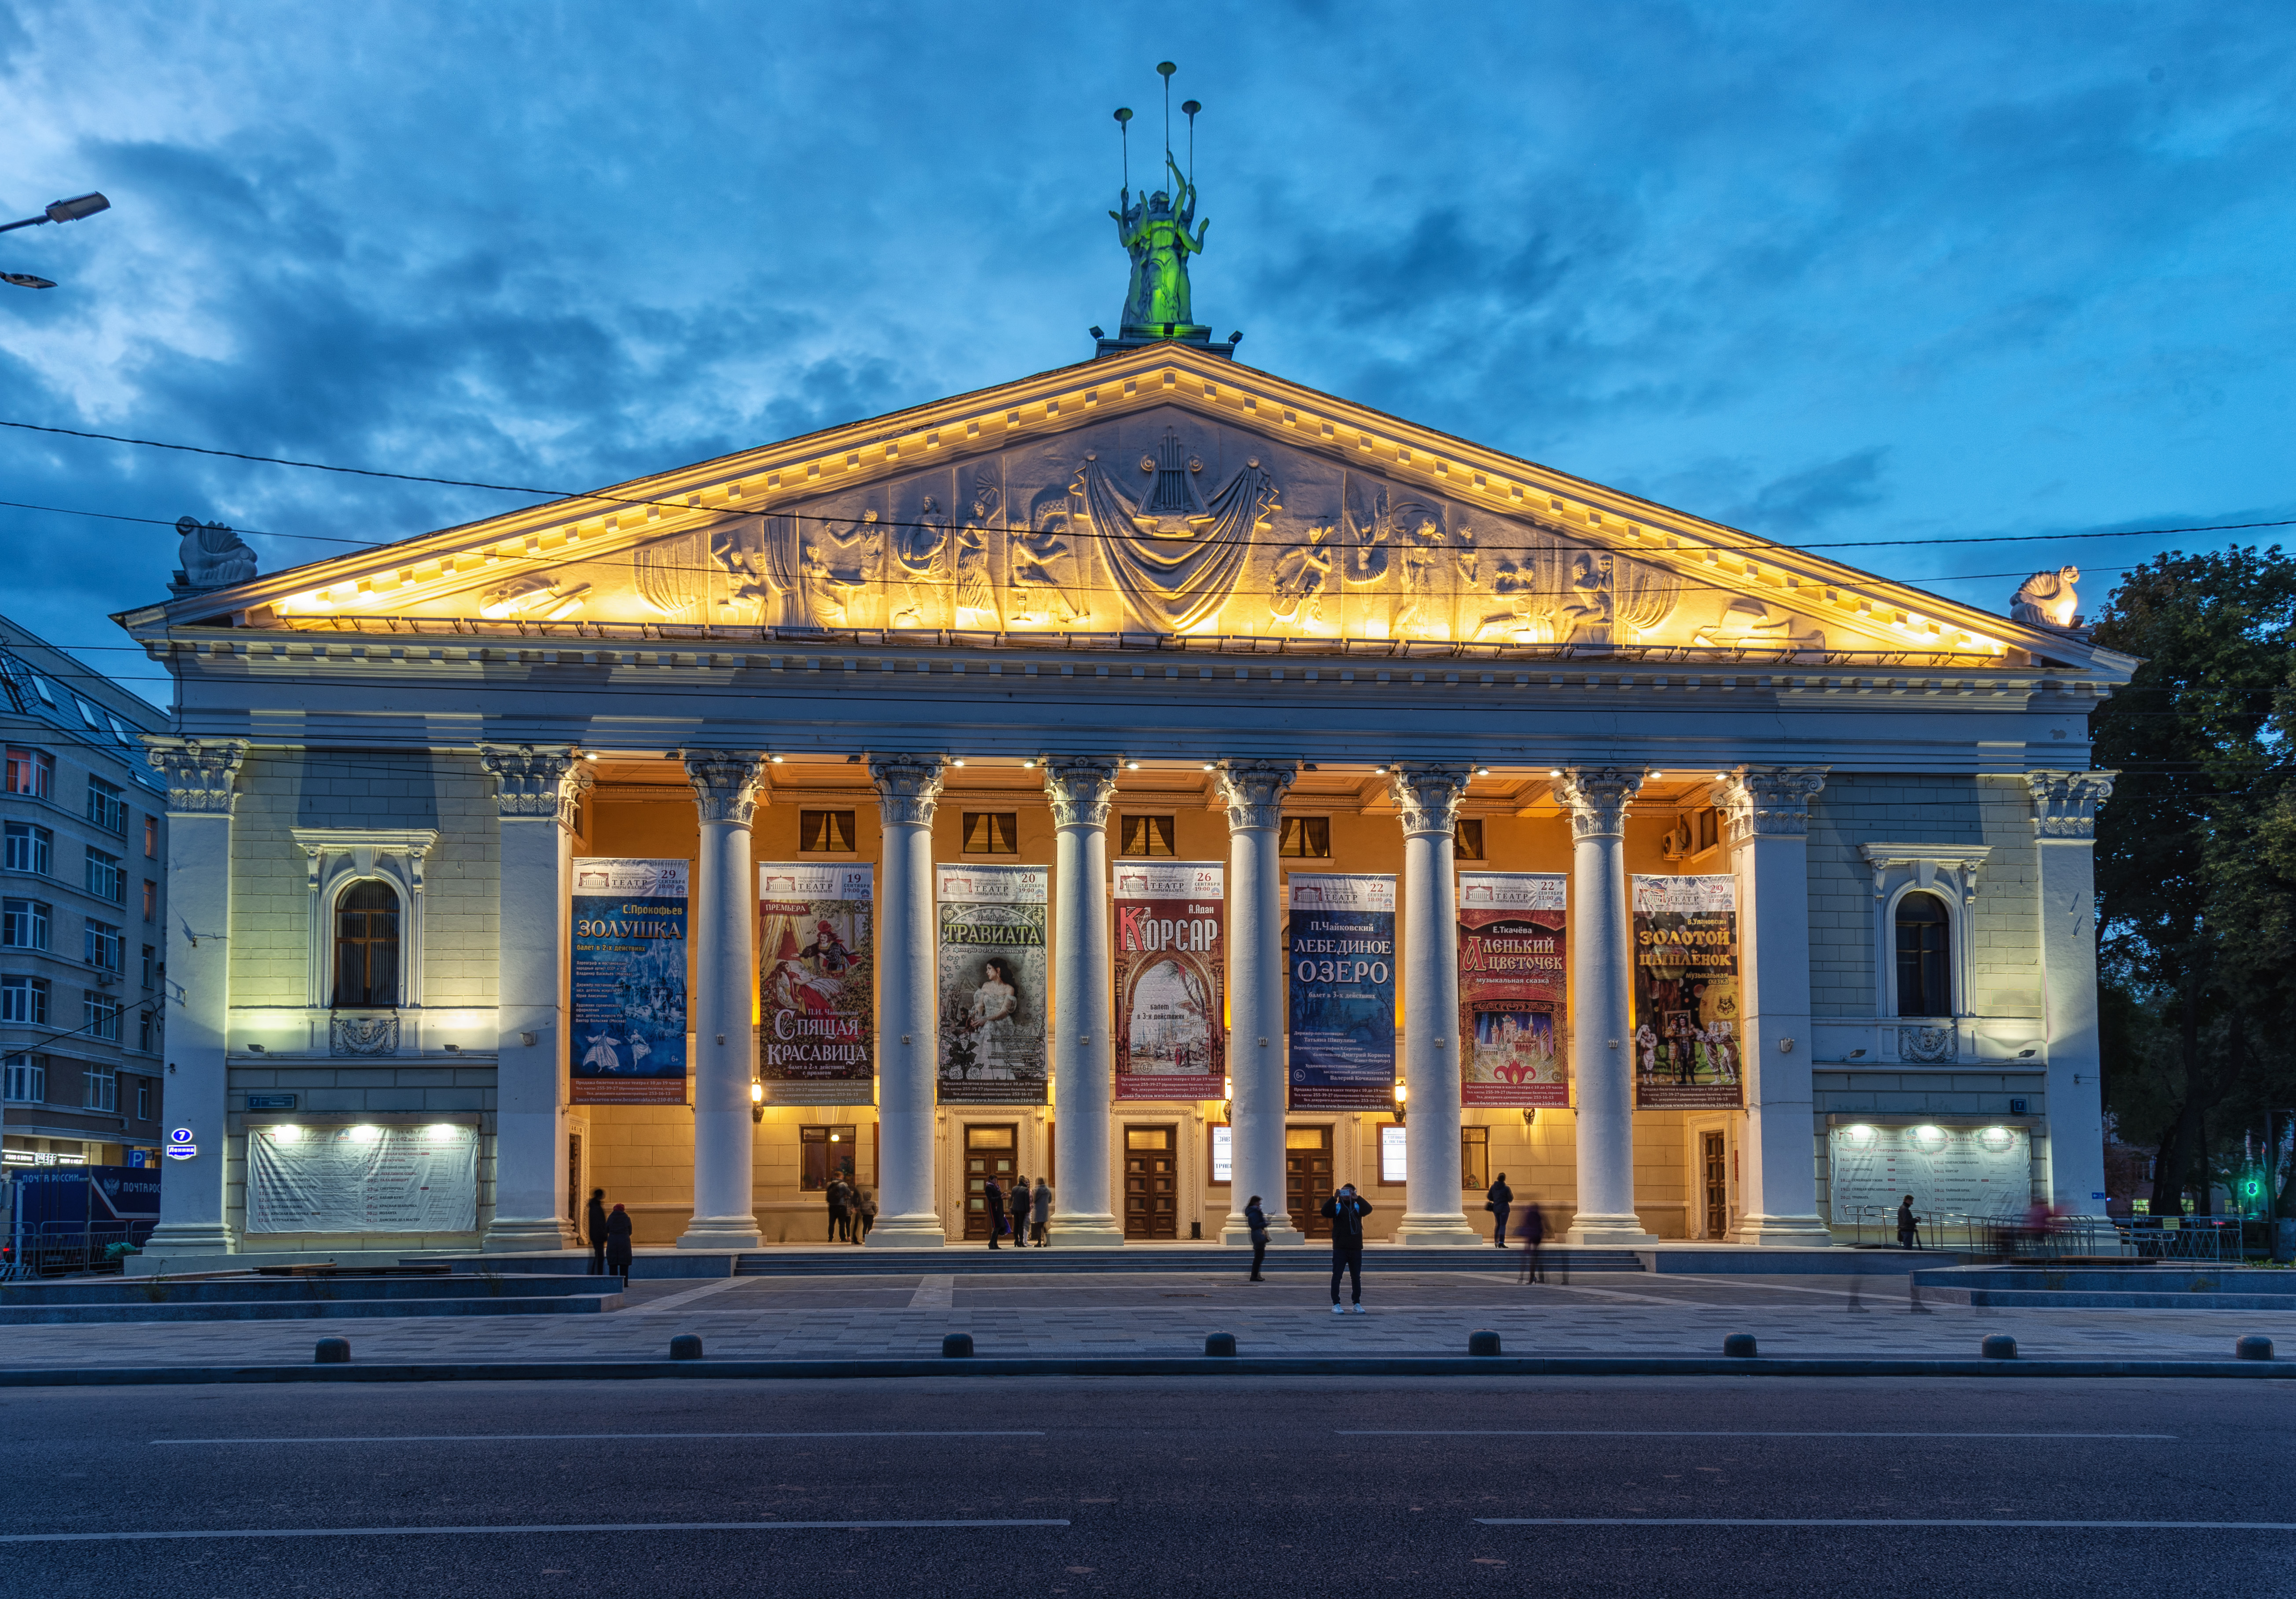 Театр оперы и балета 